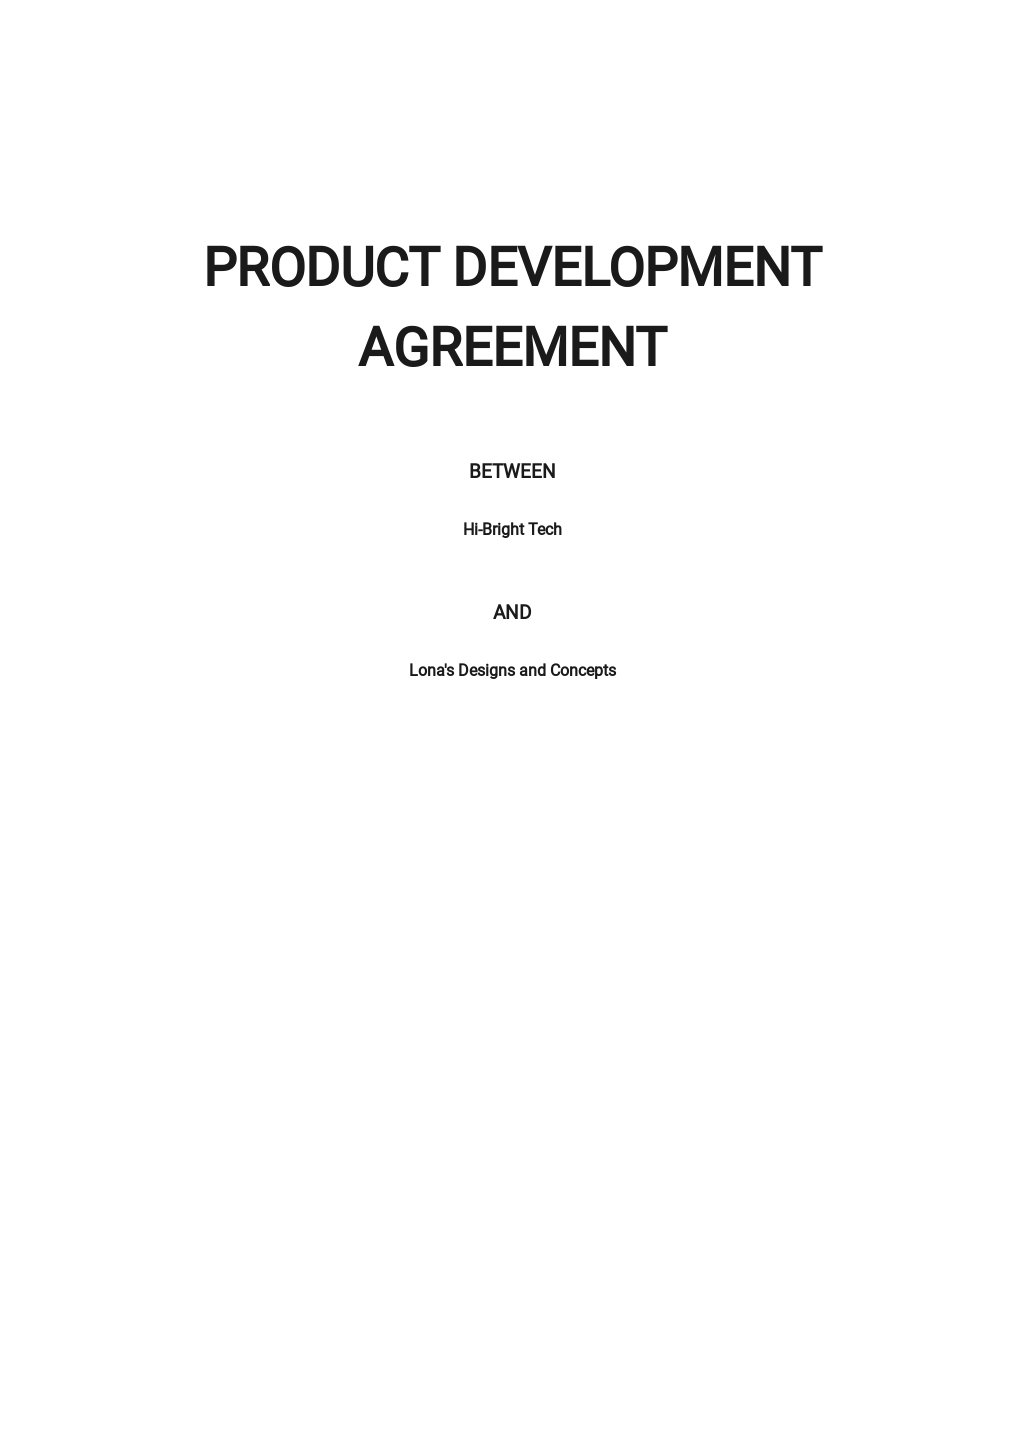 Product Development Agreement Template.jpe